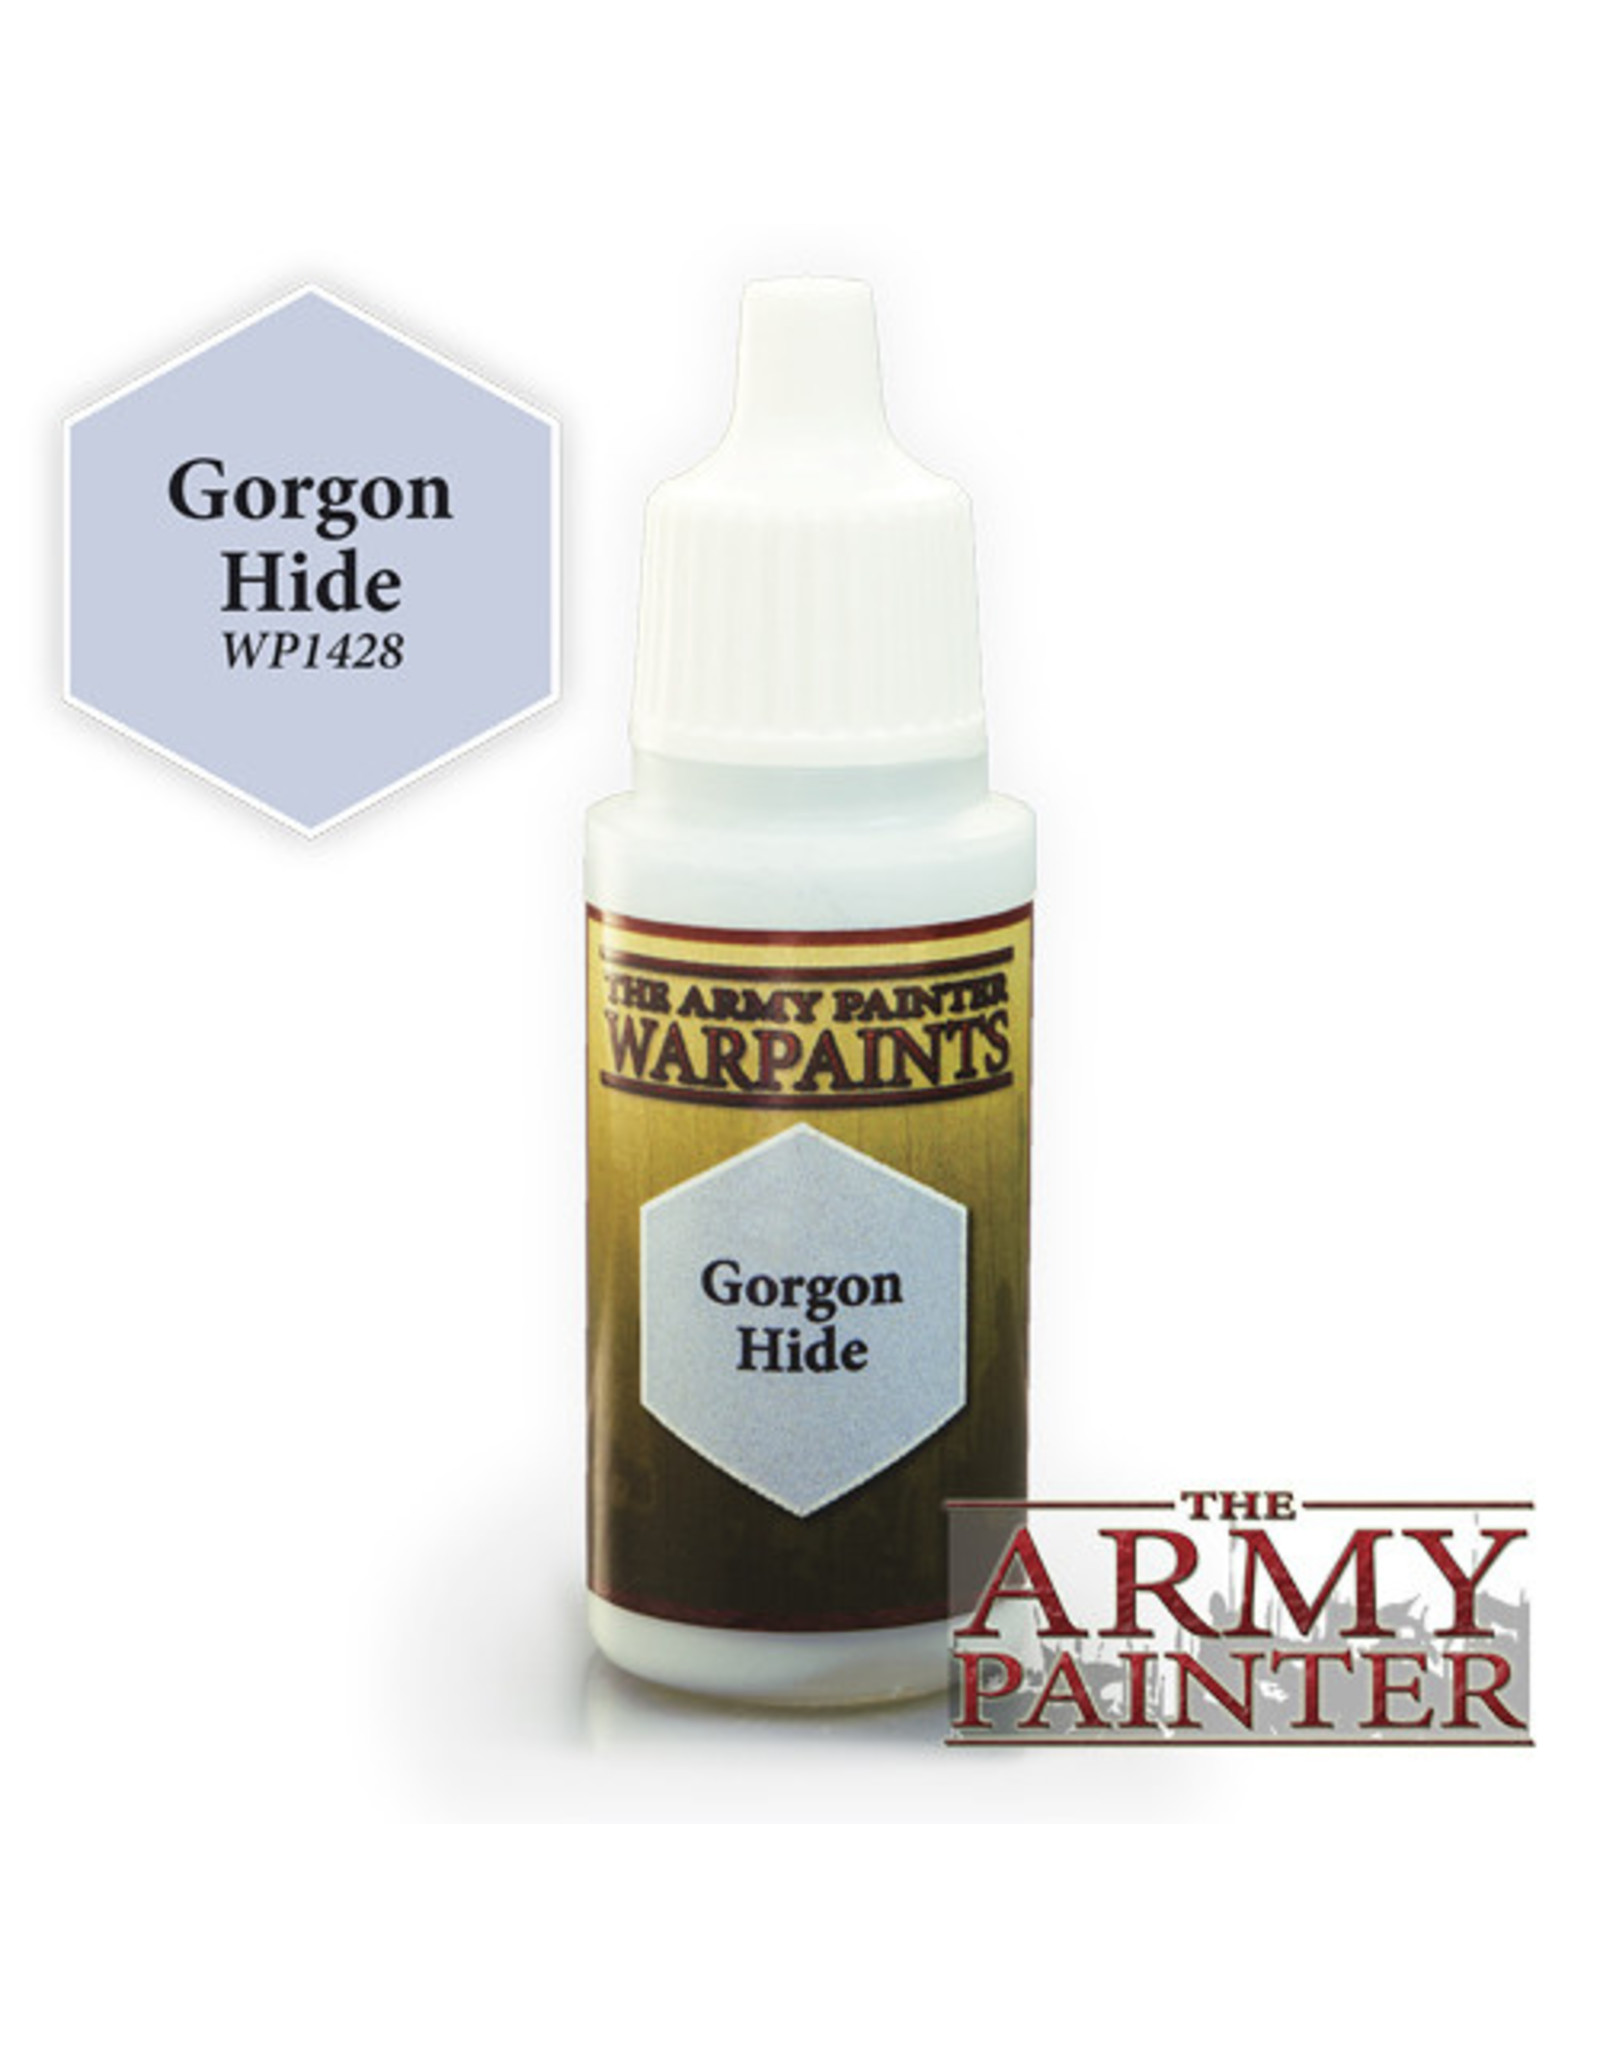 The Army Painter Warpaints: Gorgon Hide 18ml